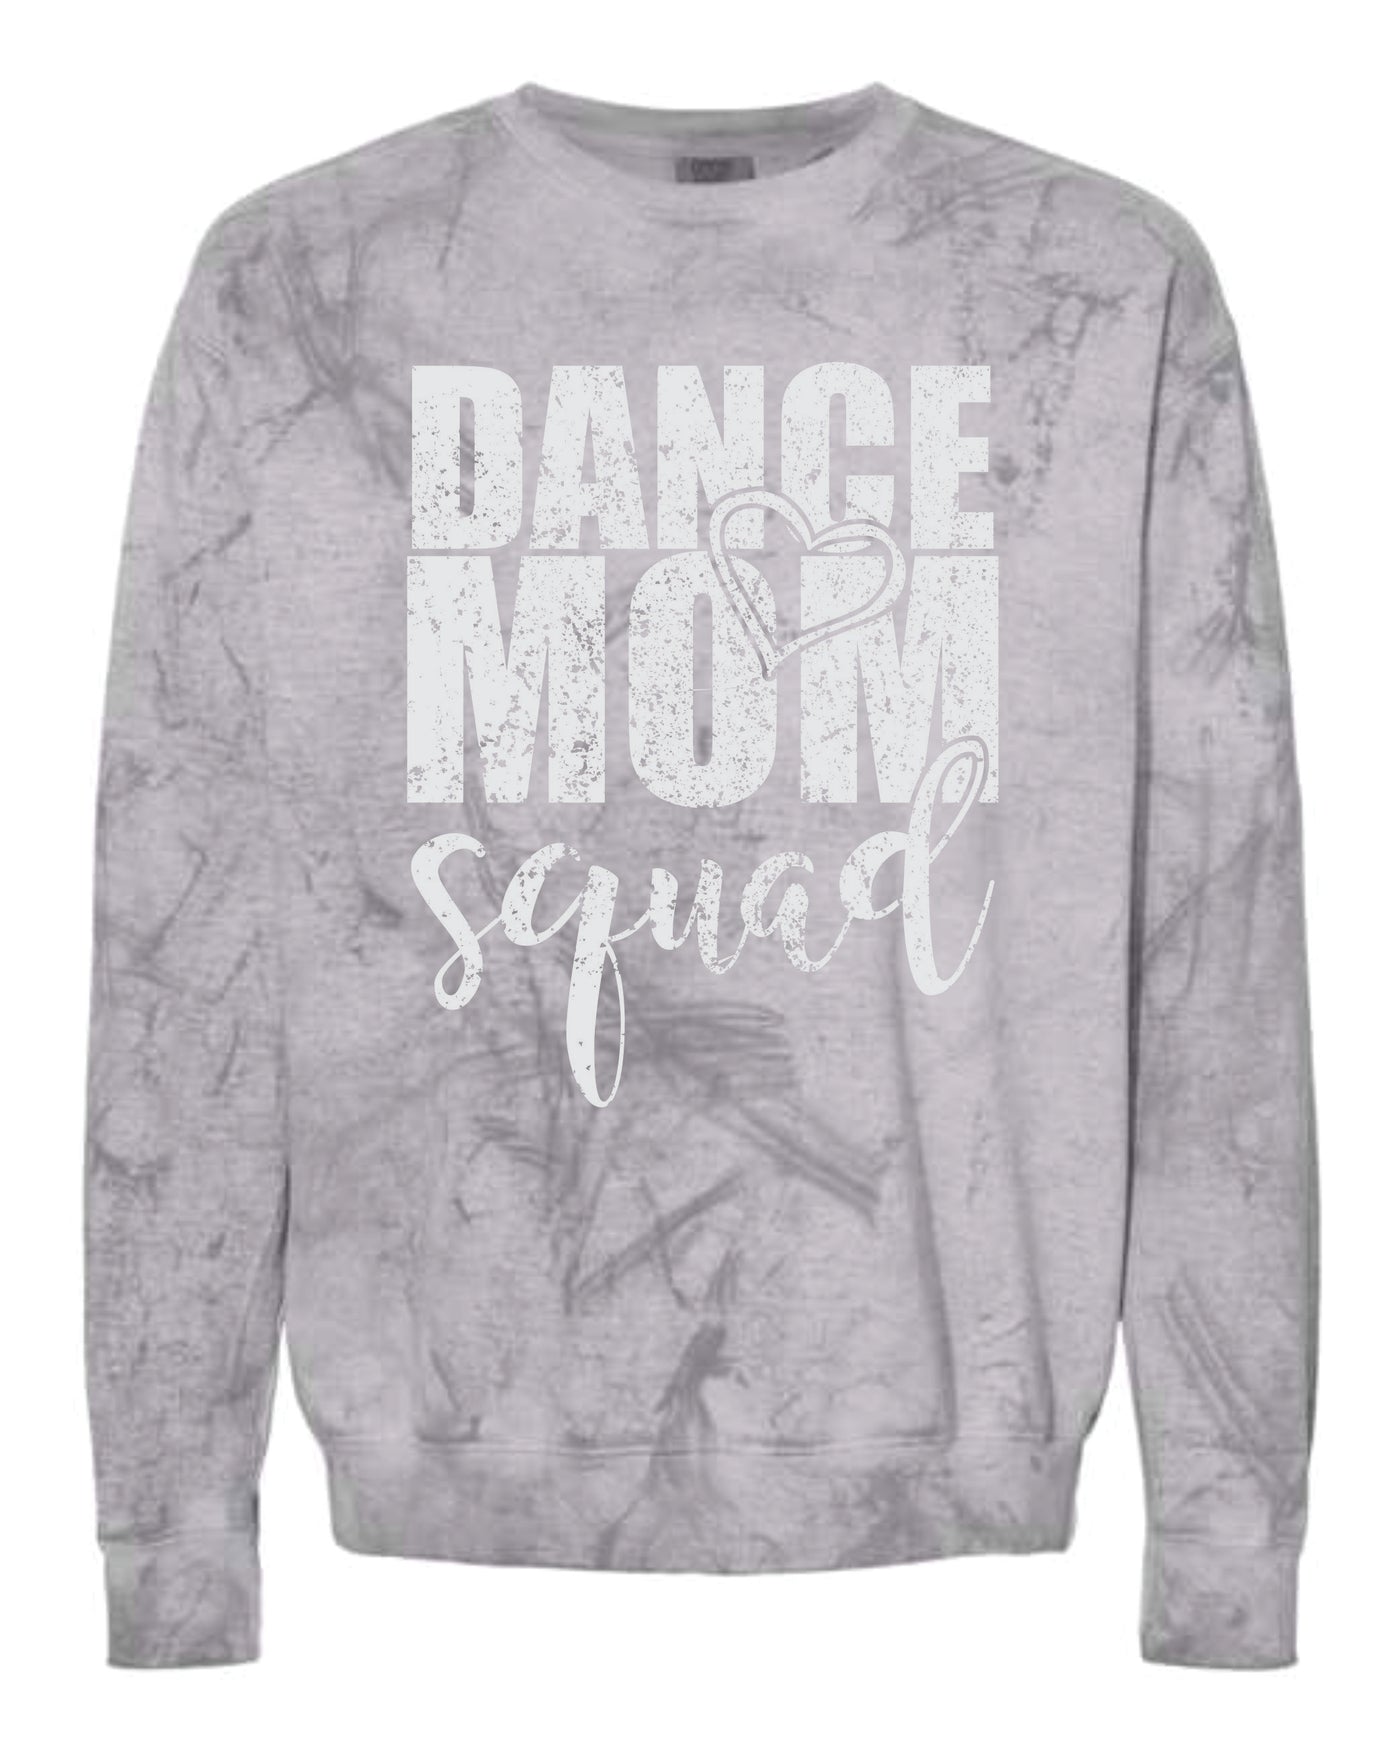 Dance Mom Squad